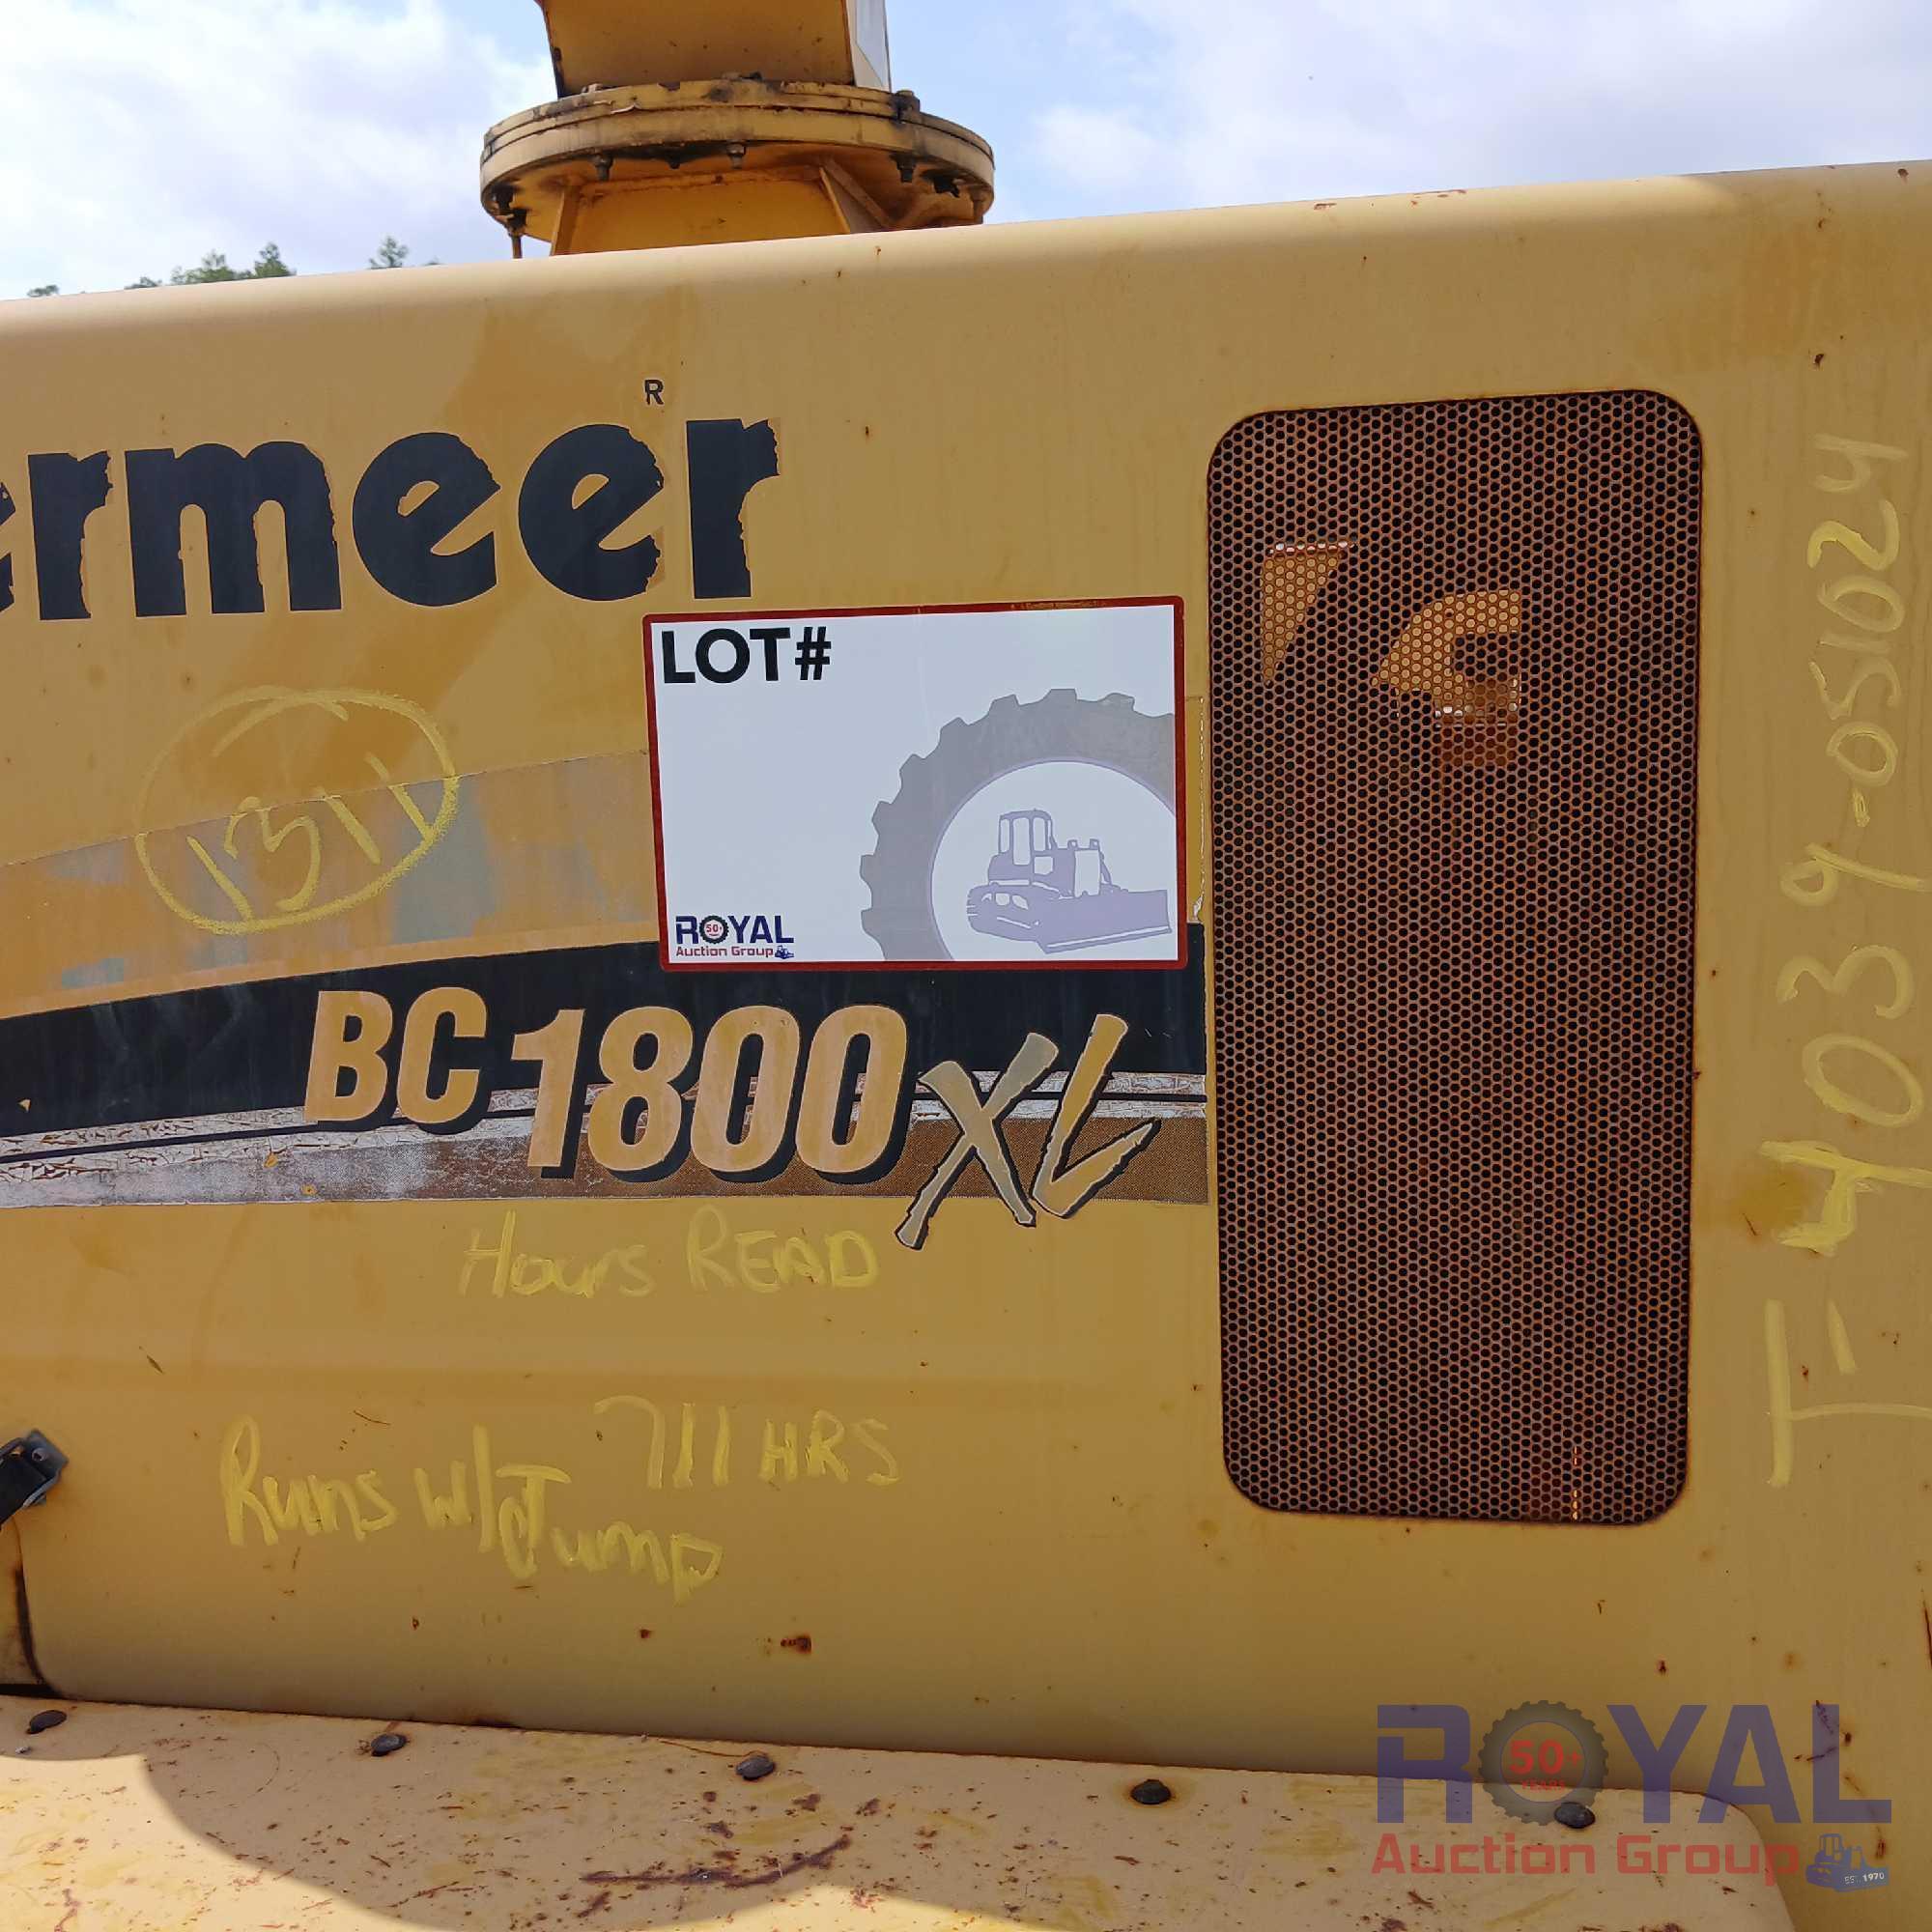 2006 Vermeer BC1800XL Wood Chipper S/A Trailer